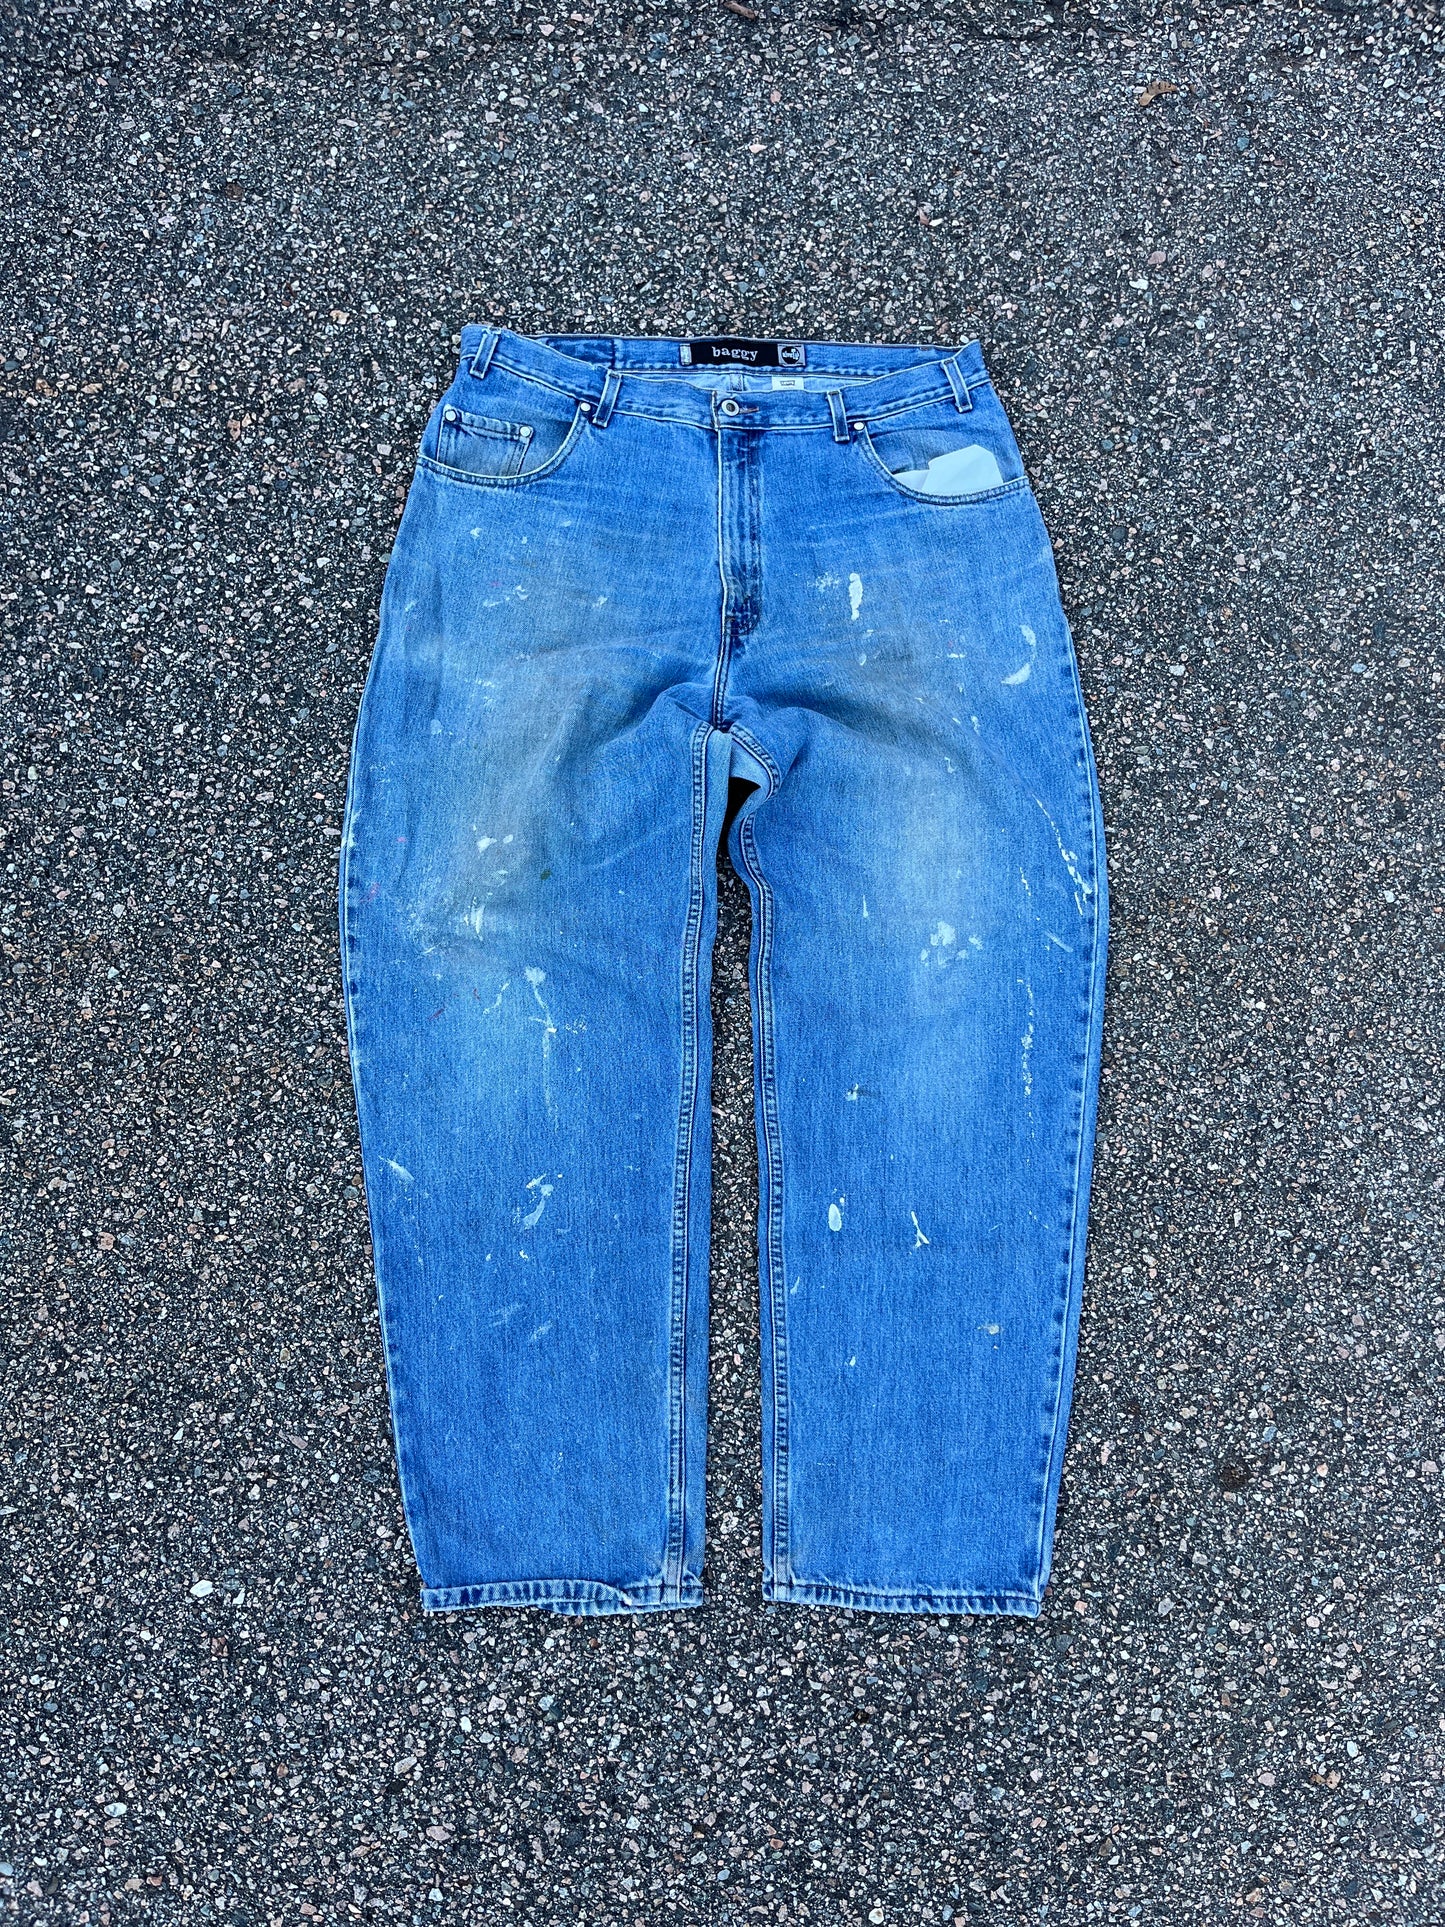 Levi’s 570 Silver Tab Faded Denim Baggy Fit Pants - 39 x 33.5